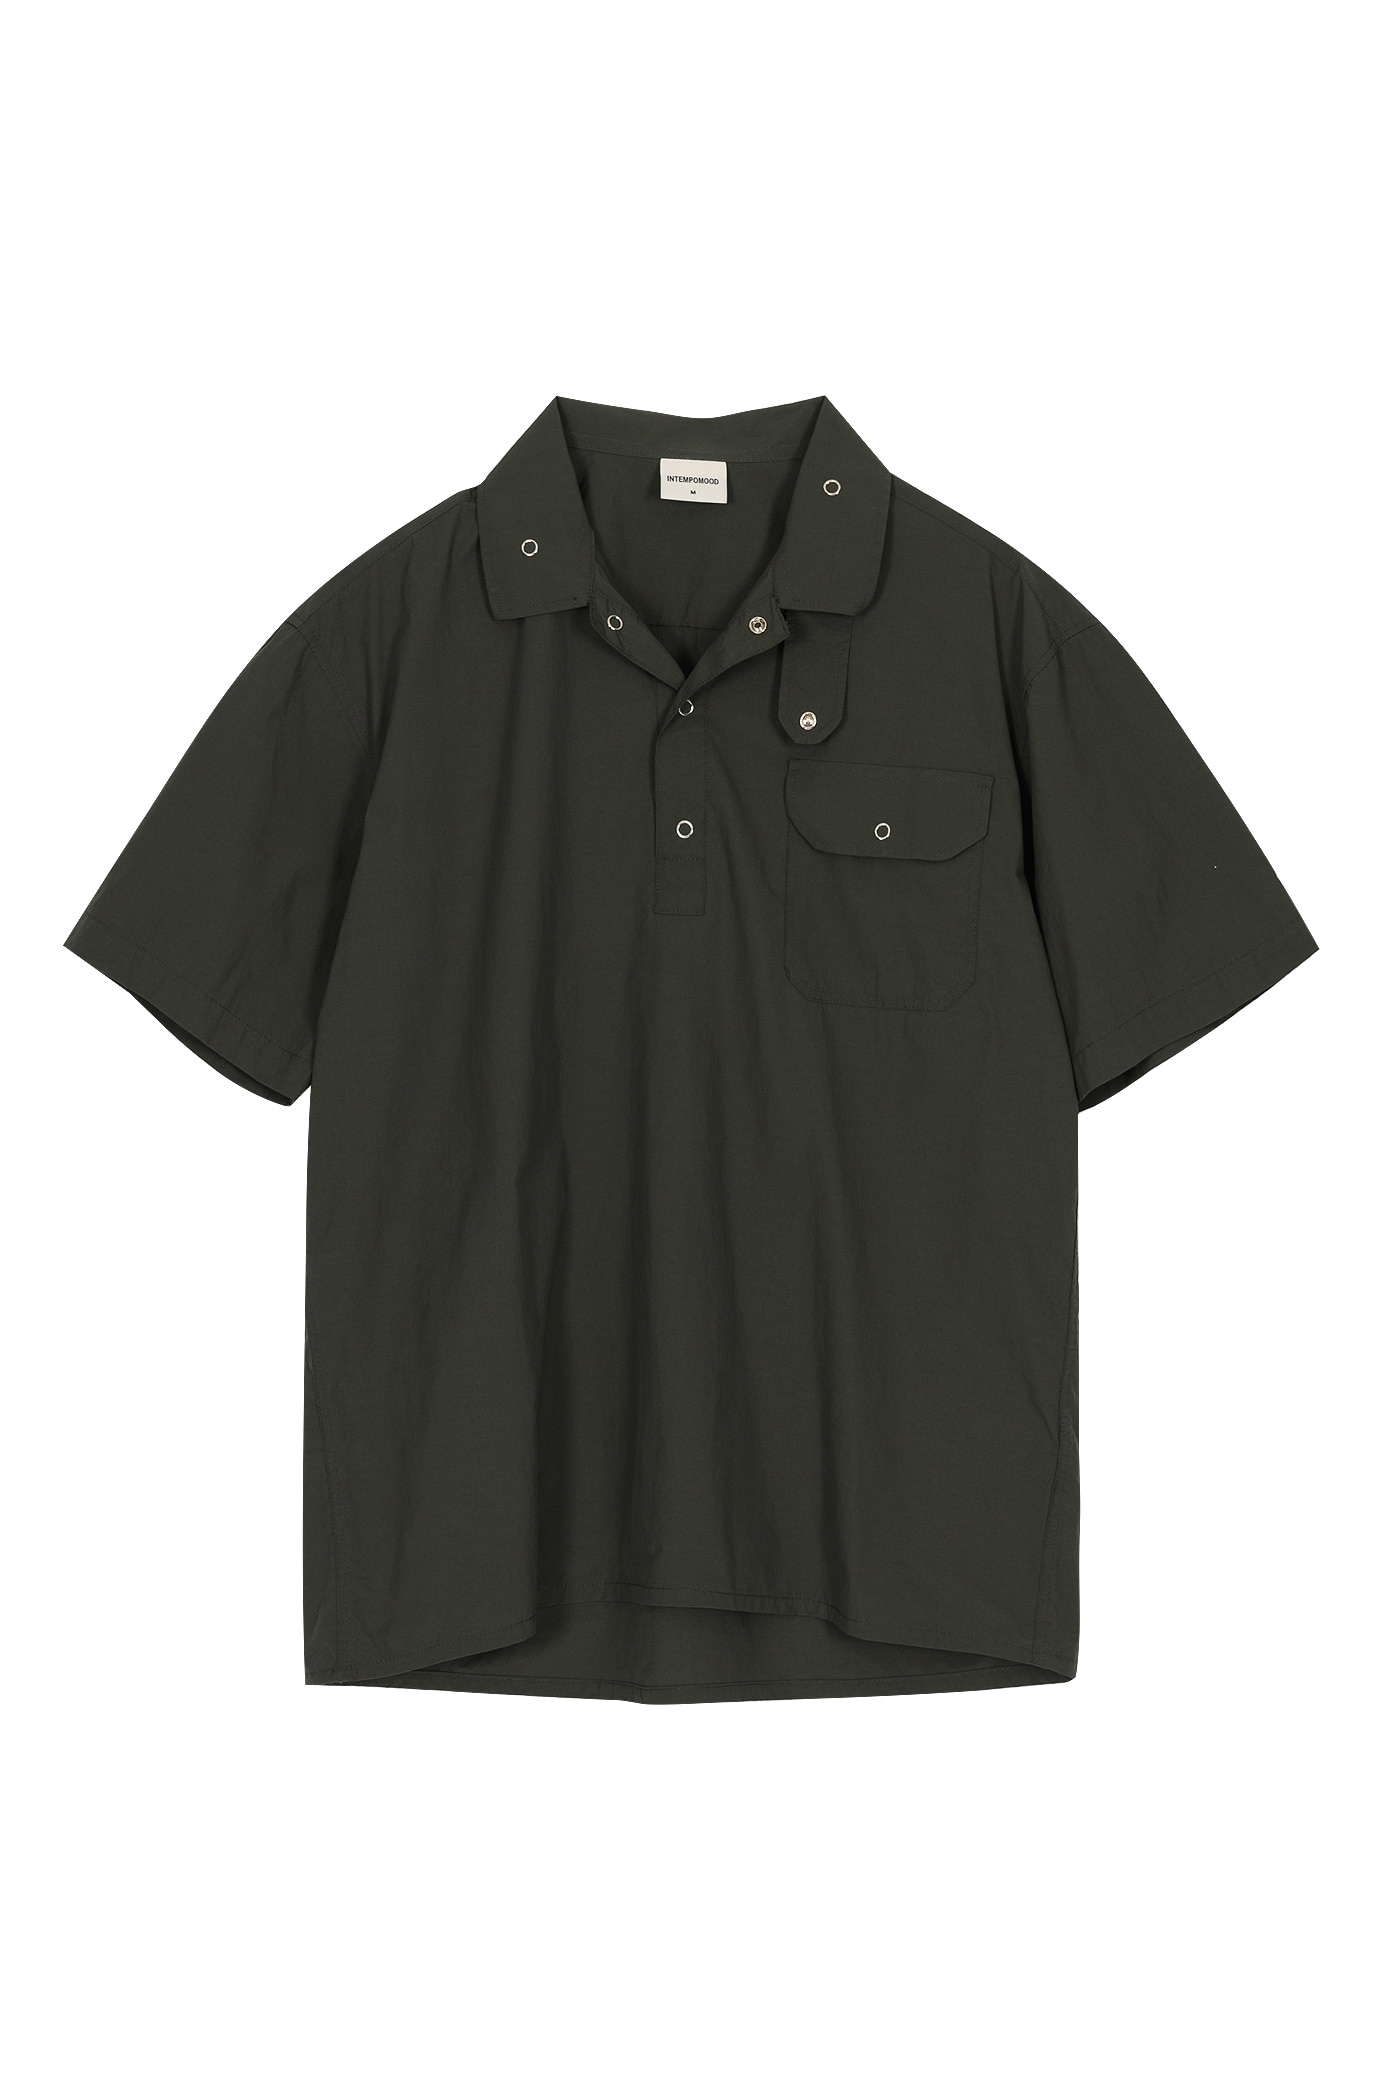 Prong Snap Button Detail Half Sleeve Shirts_Khaki